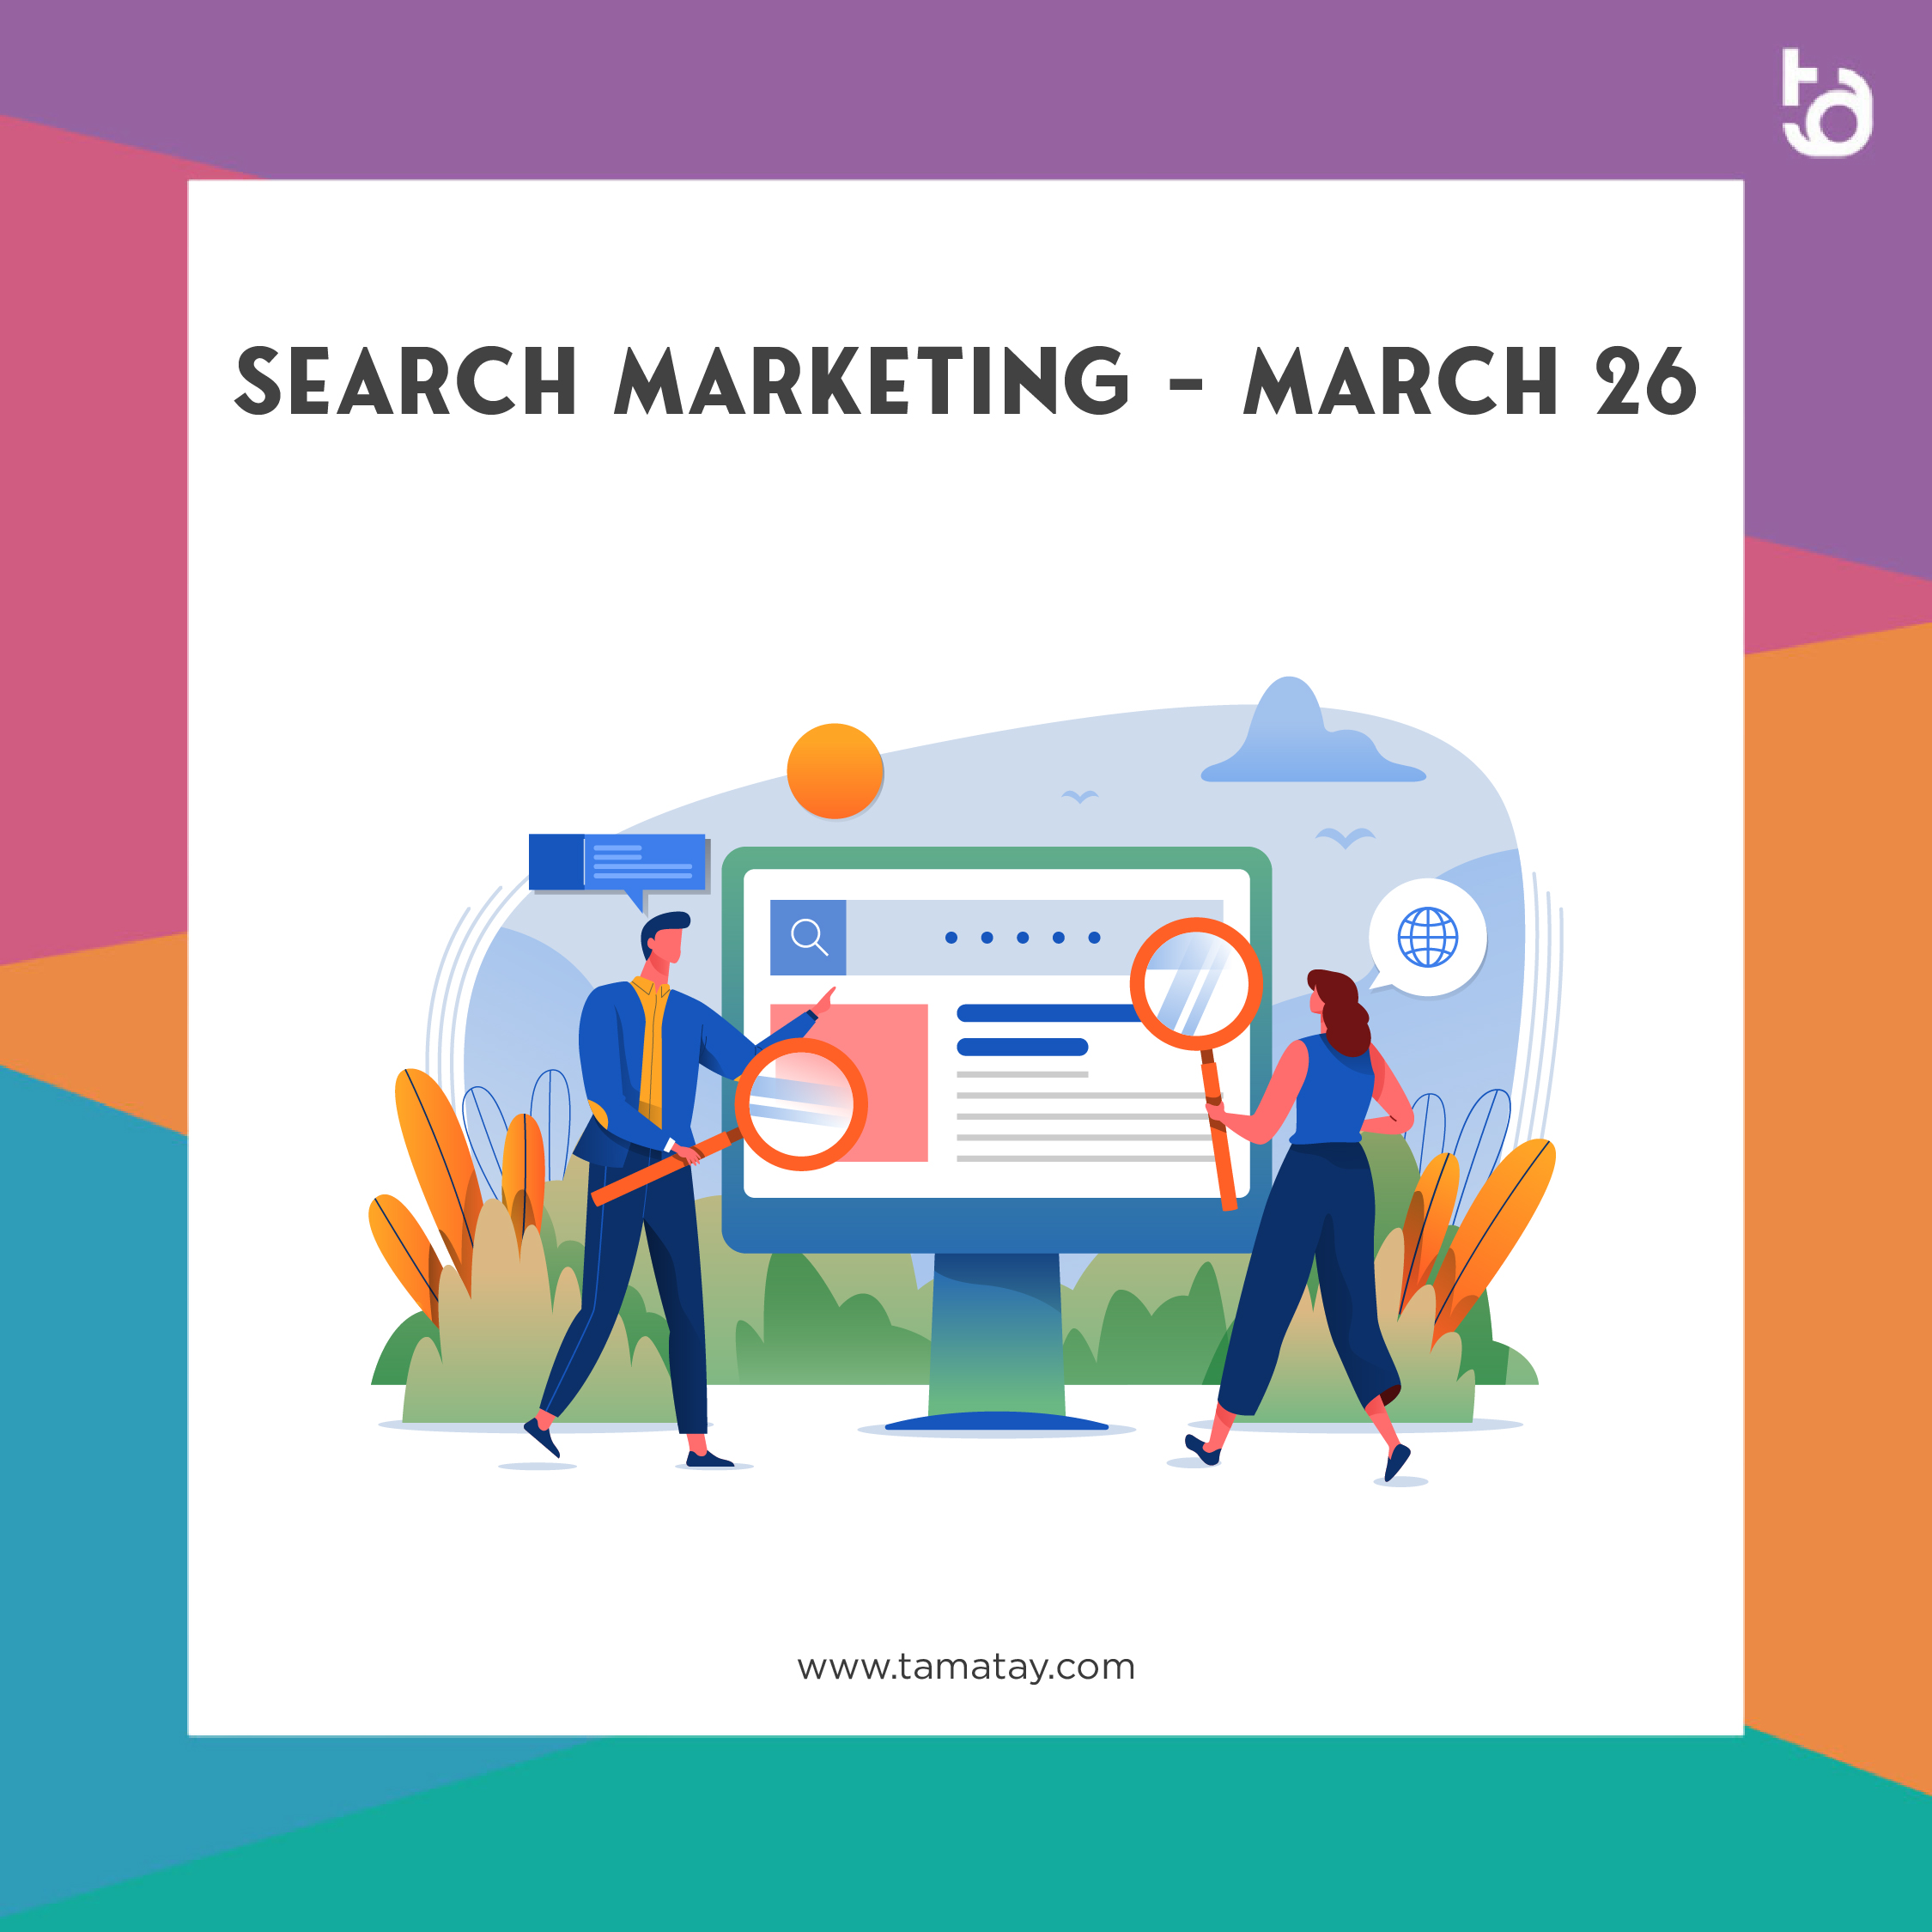 Search Marketing – March 26